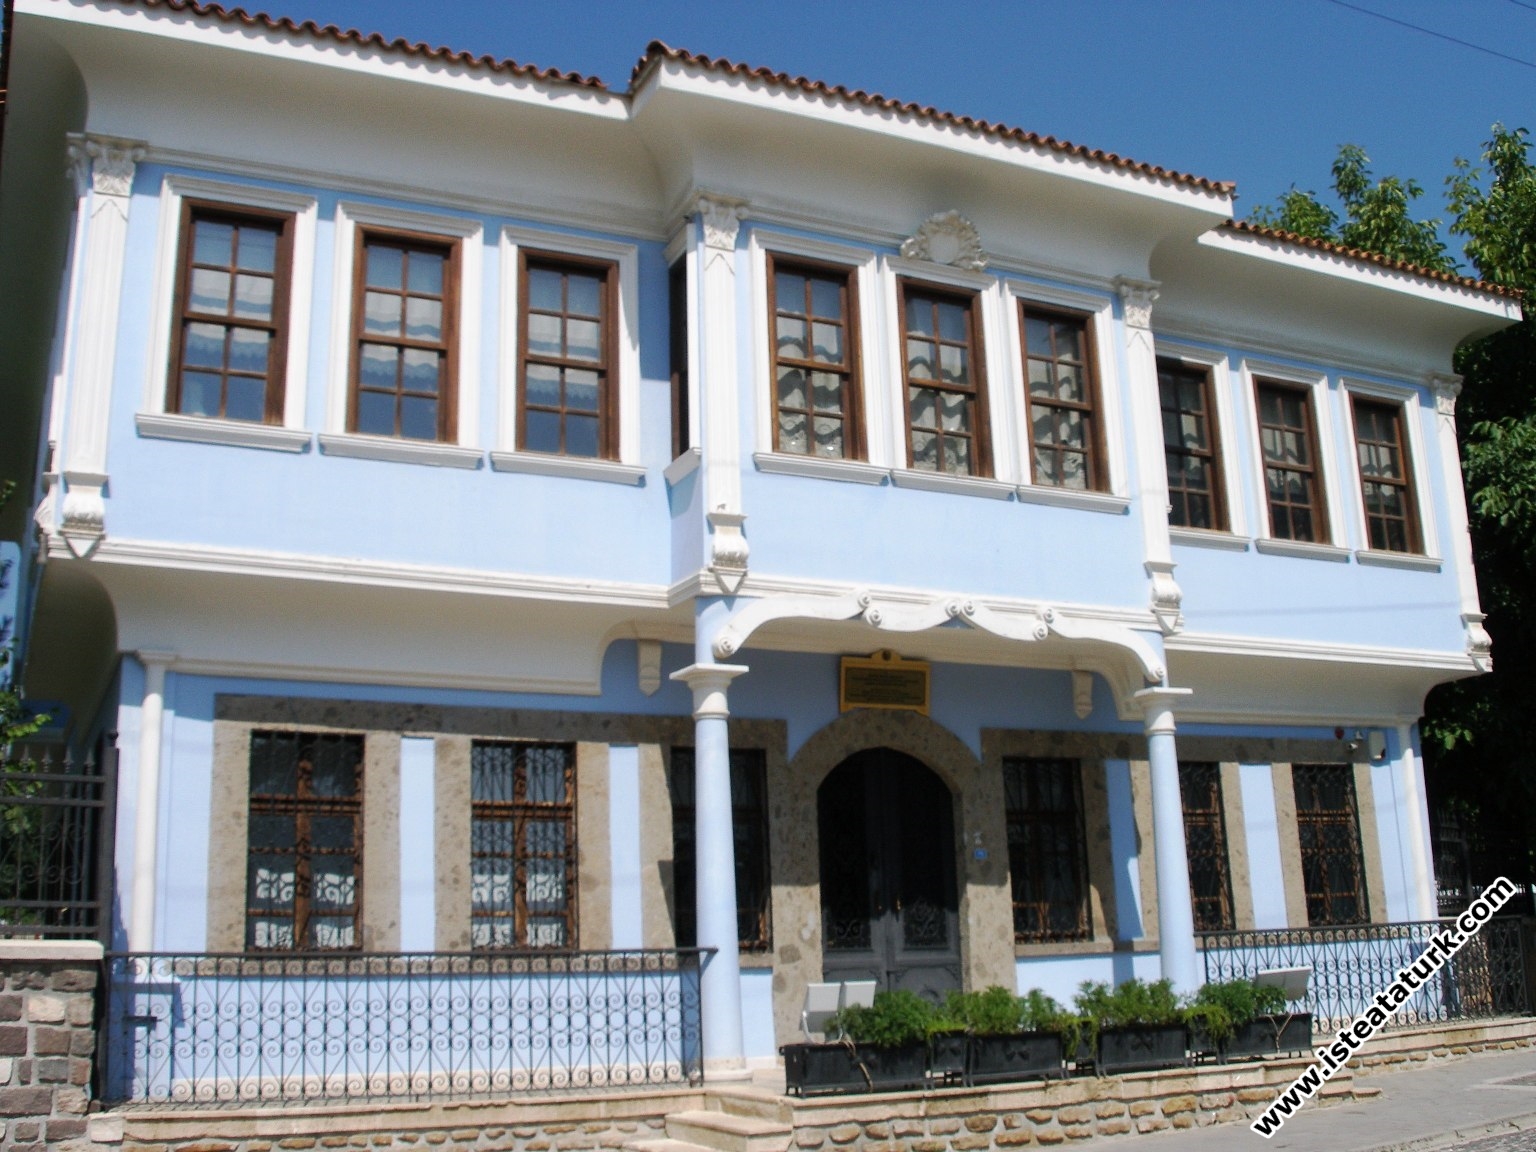 Uşak - Atatürk and Ethnography Museum